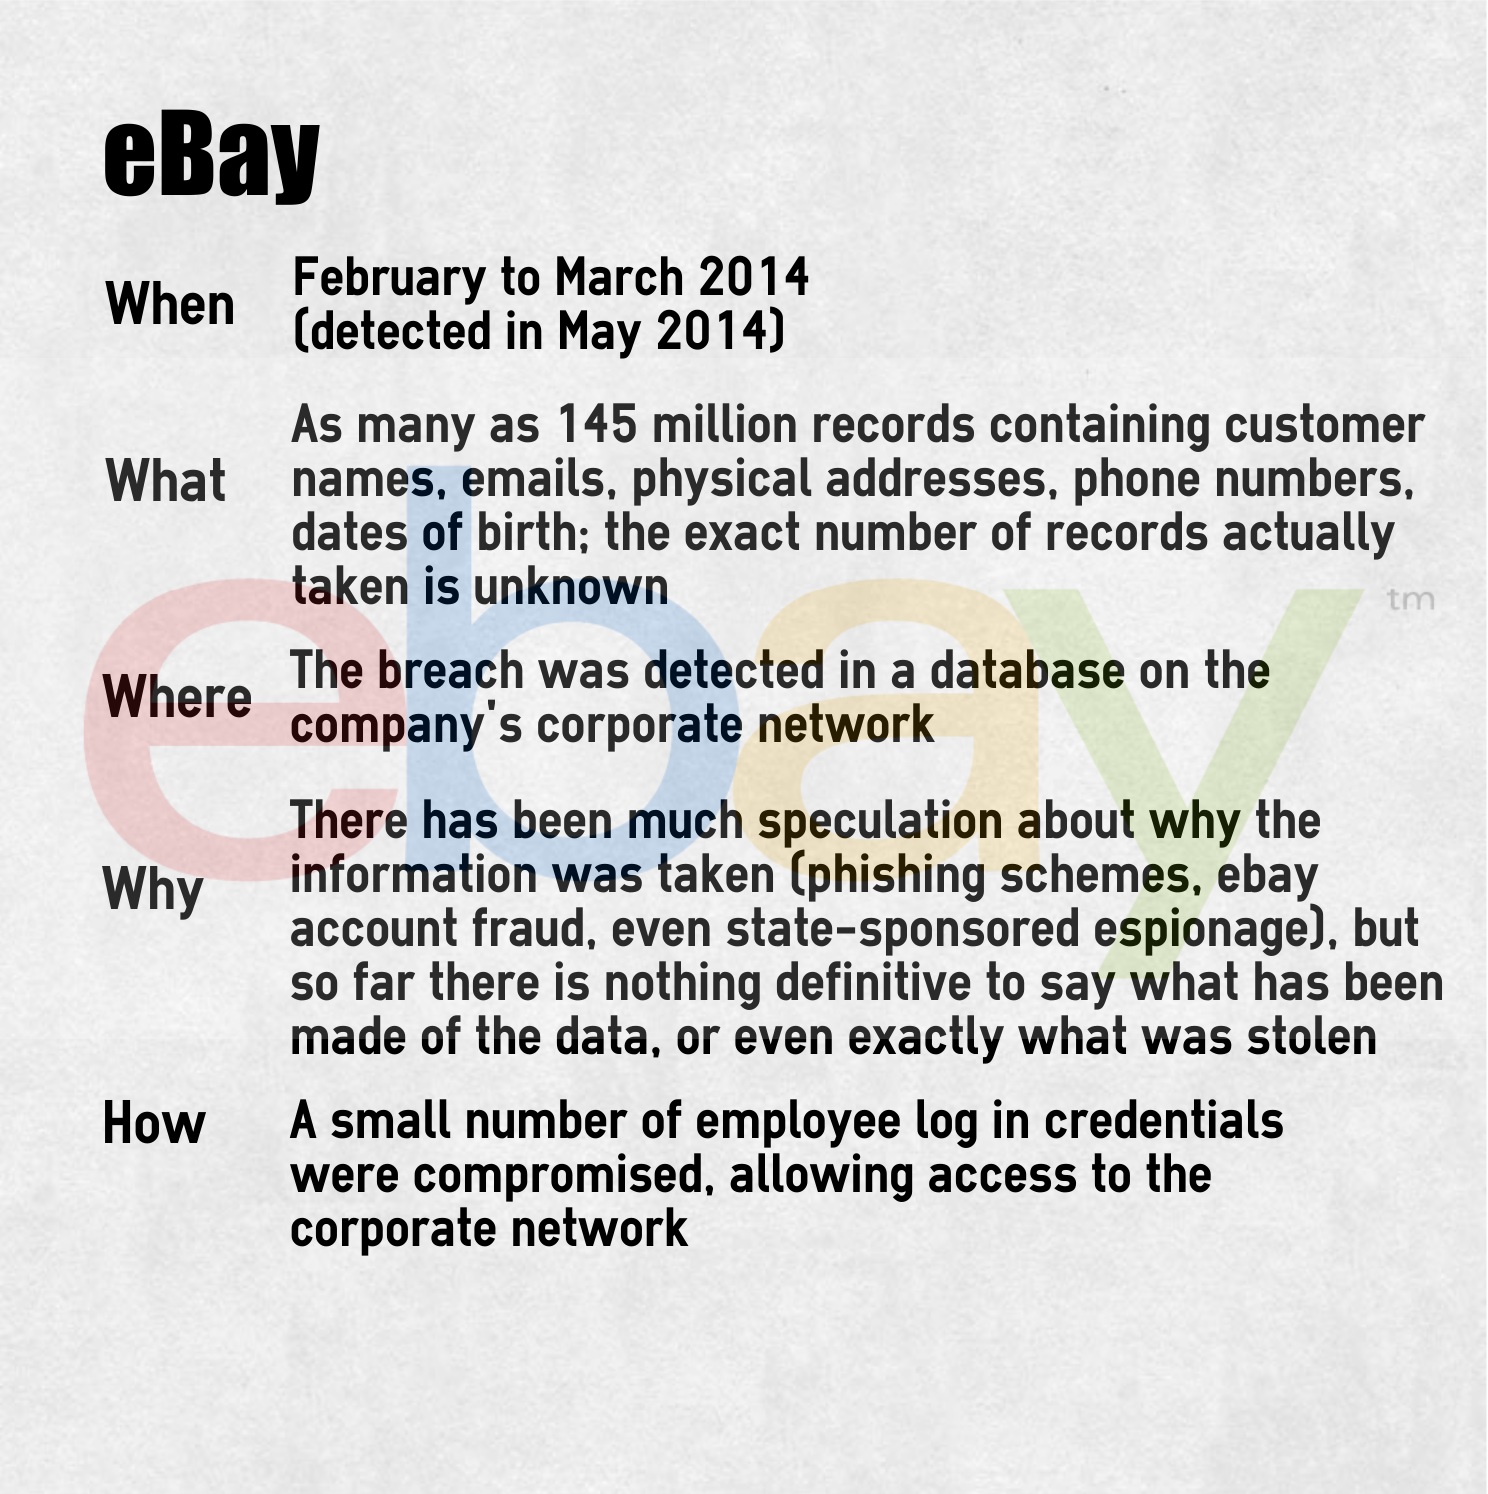 ebay data breach case study